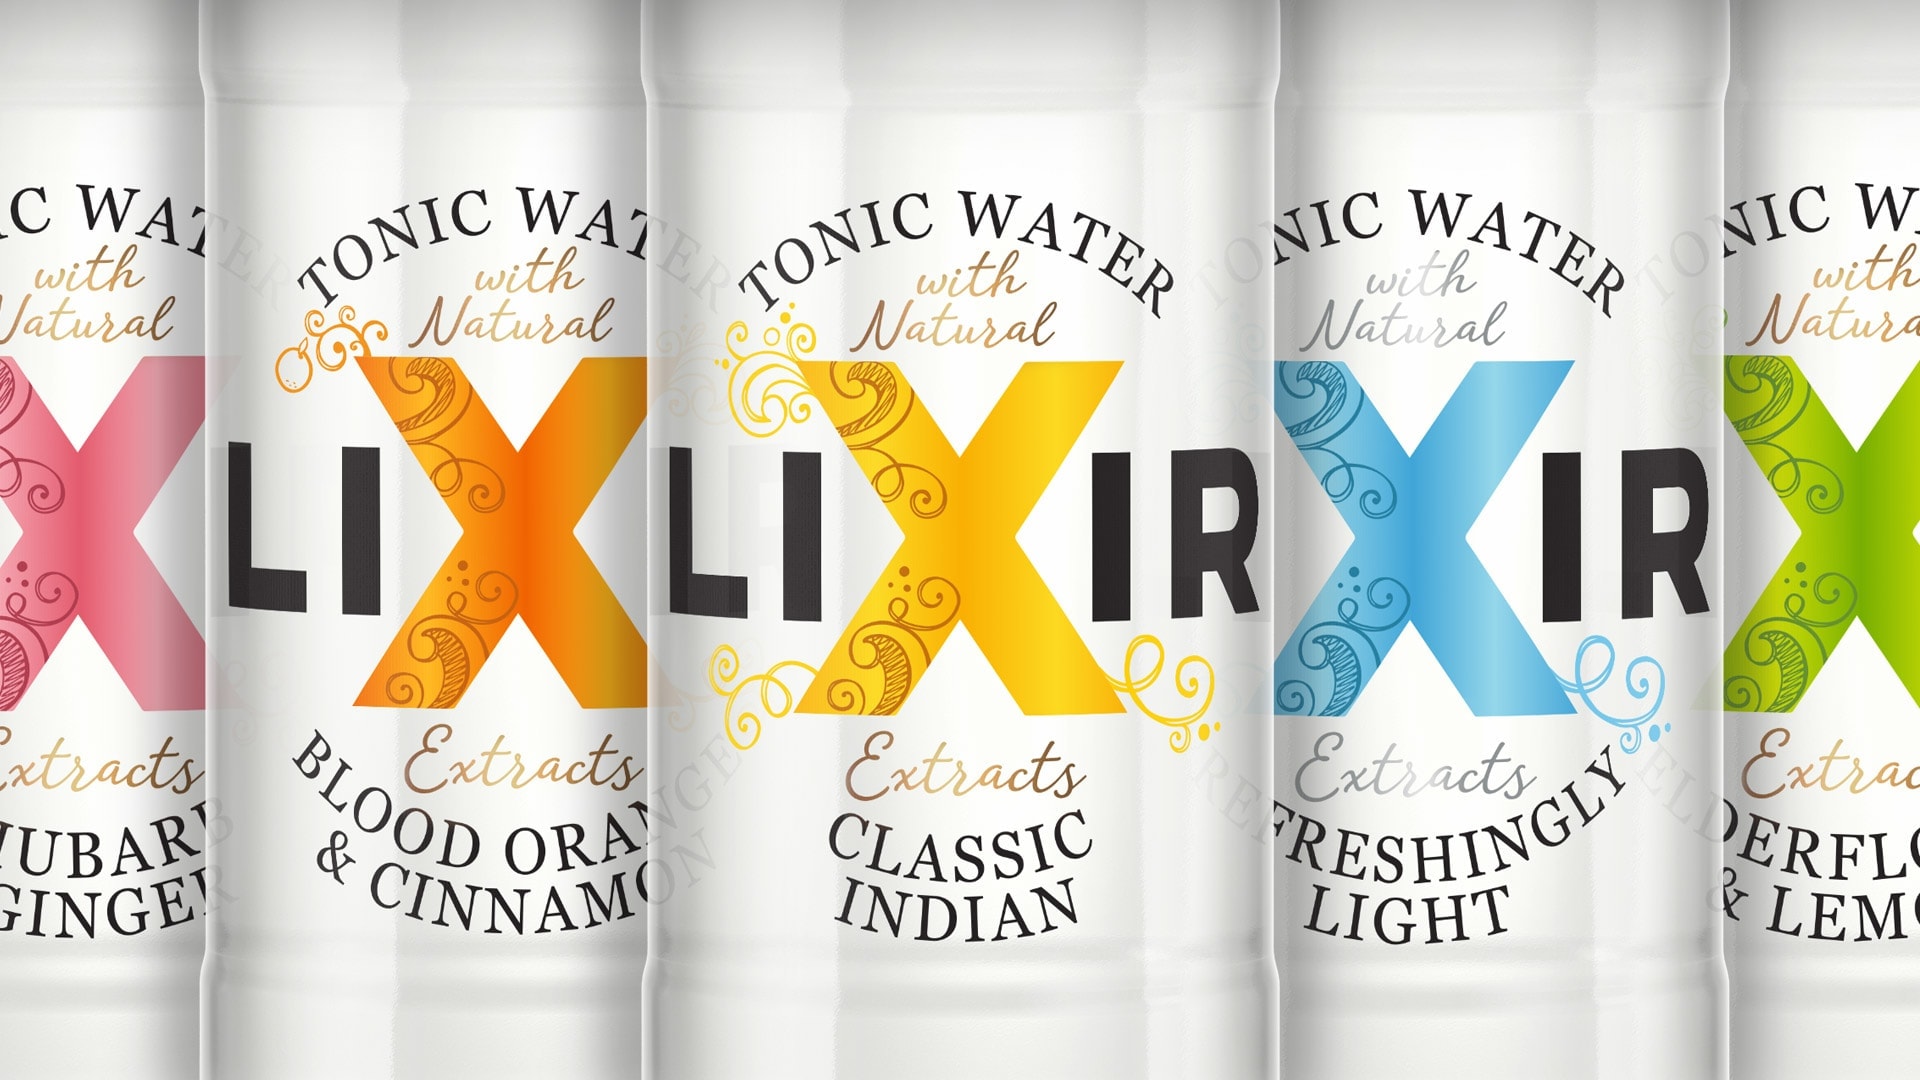 Lixir Tonic Water branding and packaging design